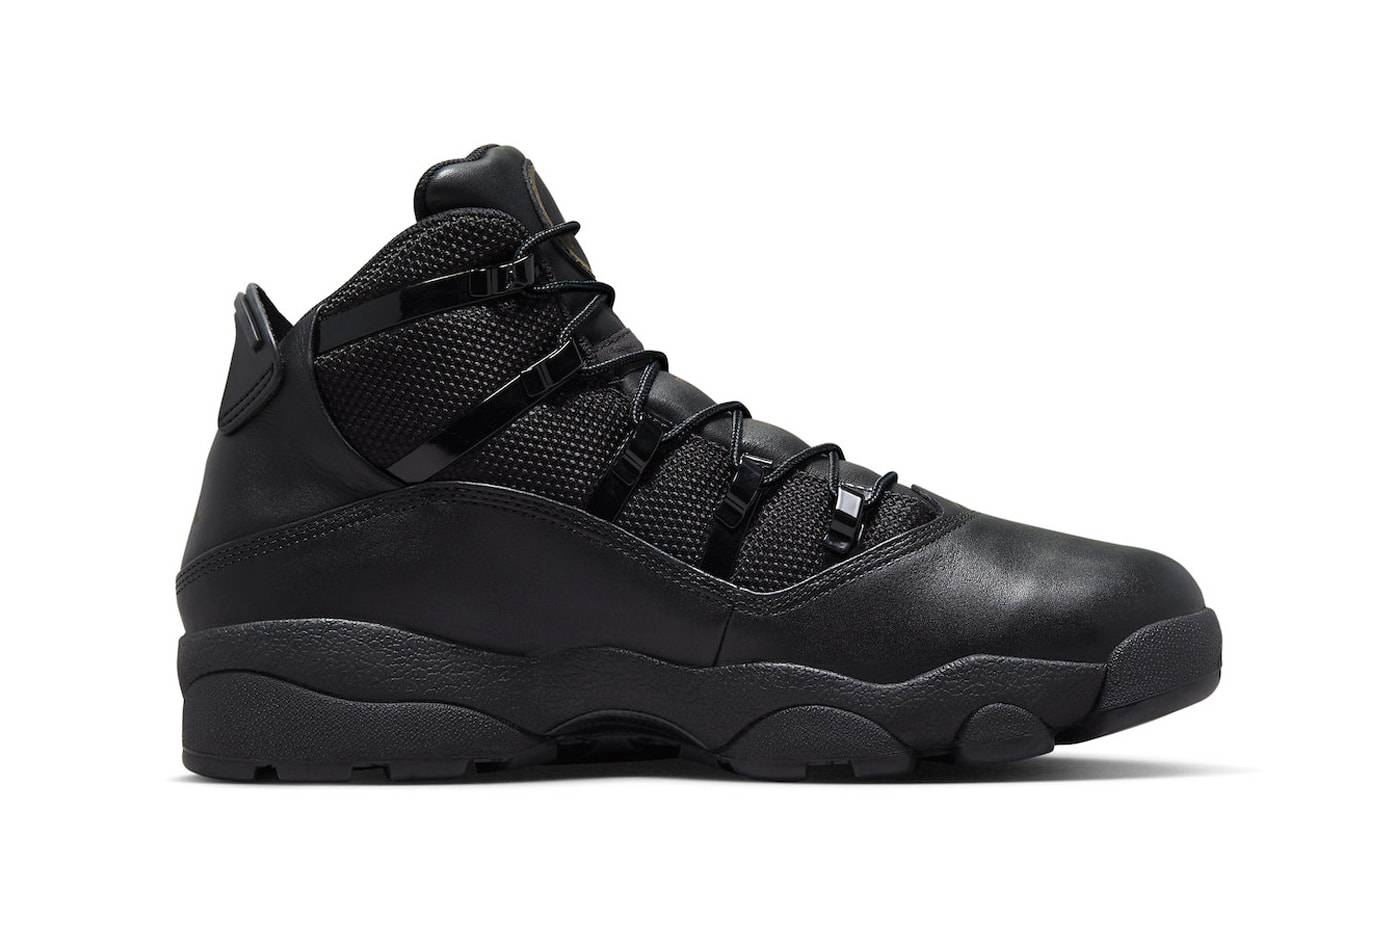 FV3826-001 Jordan 6 Rings Winterized Surfaces in All-Black jordan brand michael jordan winter boots shoes basketball high top 